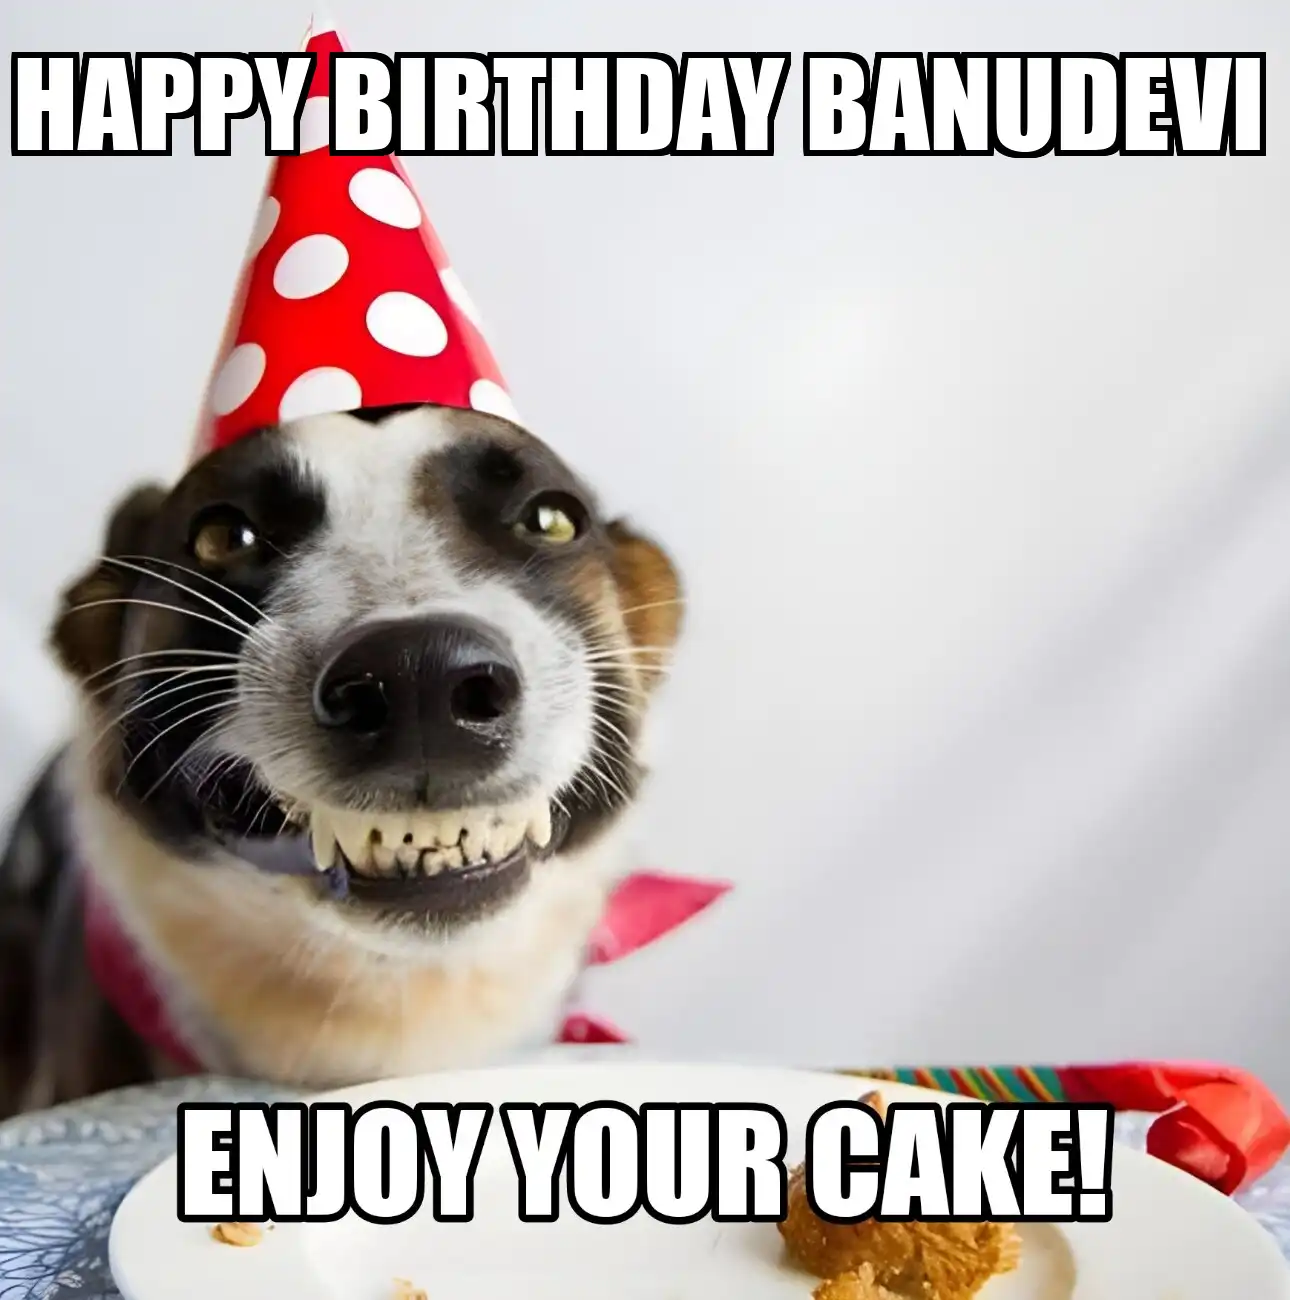 Happy Birthday Banudevi Enjoy Your Cake Dog Meme